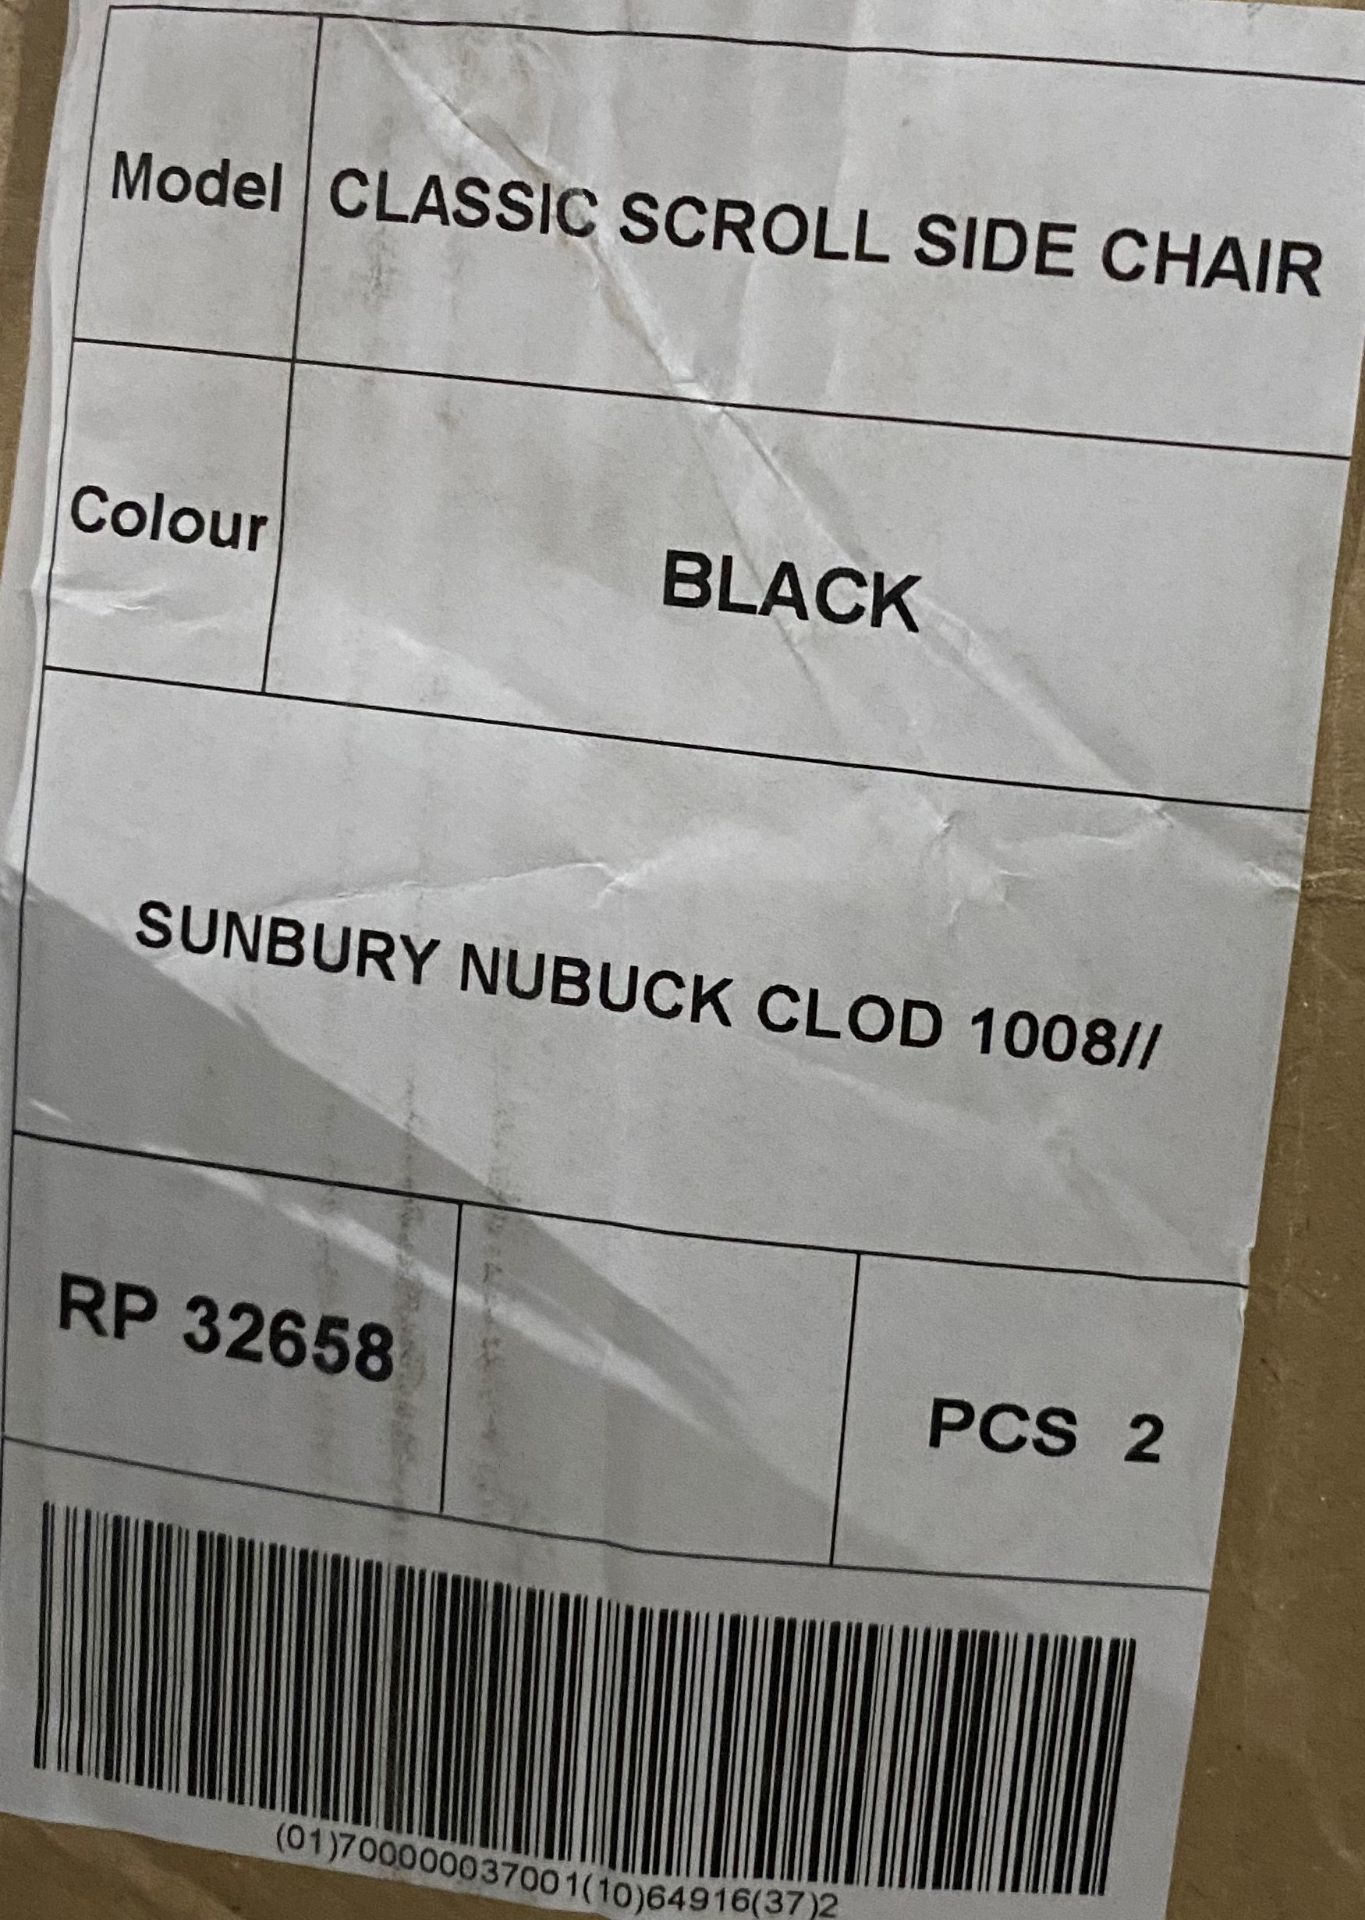 2 x Classic Scroll Sunbury Nubuck Clod 1008 side/dining chairs - Image 3 of 3